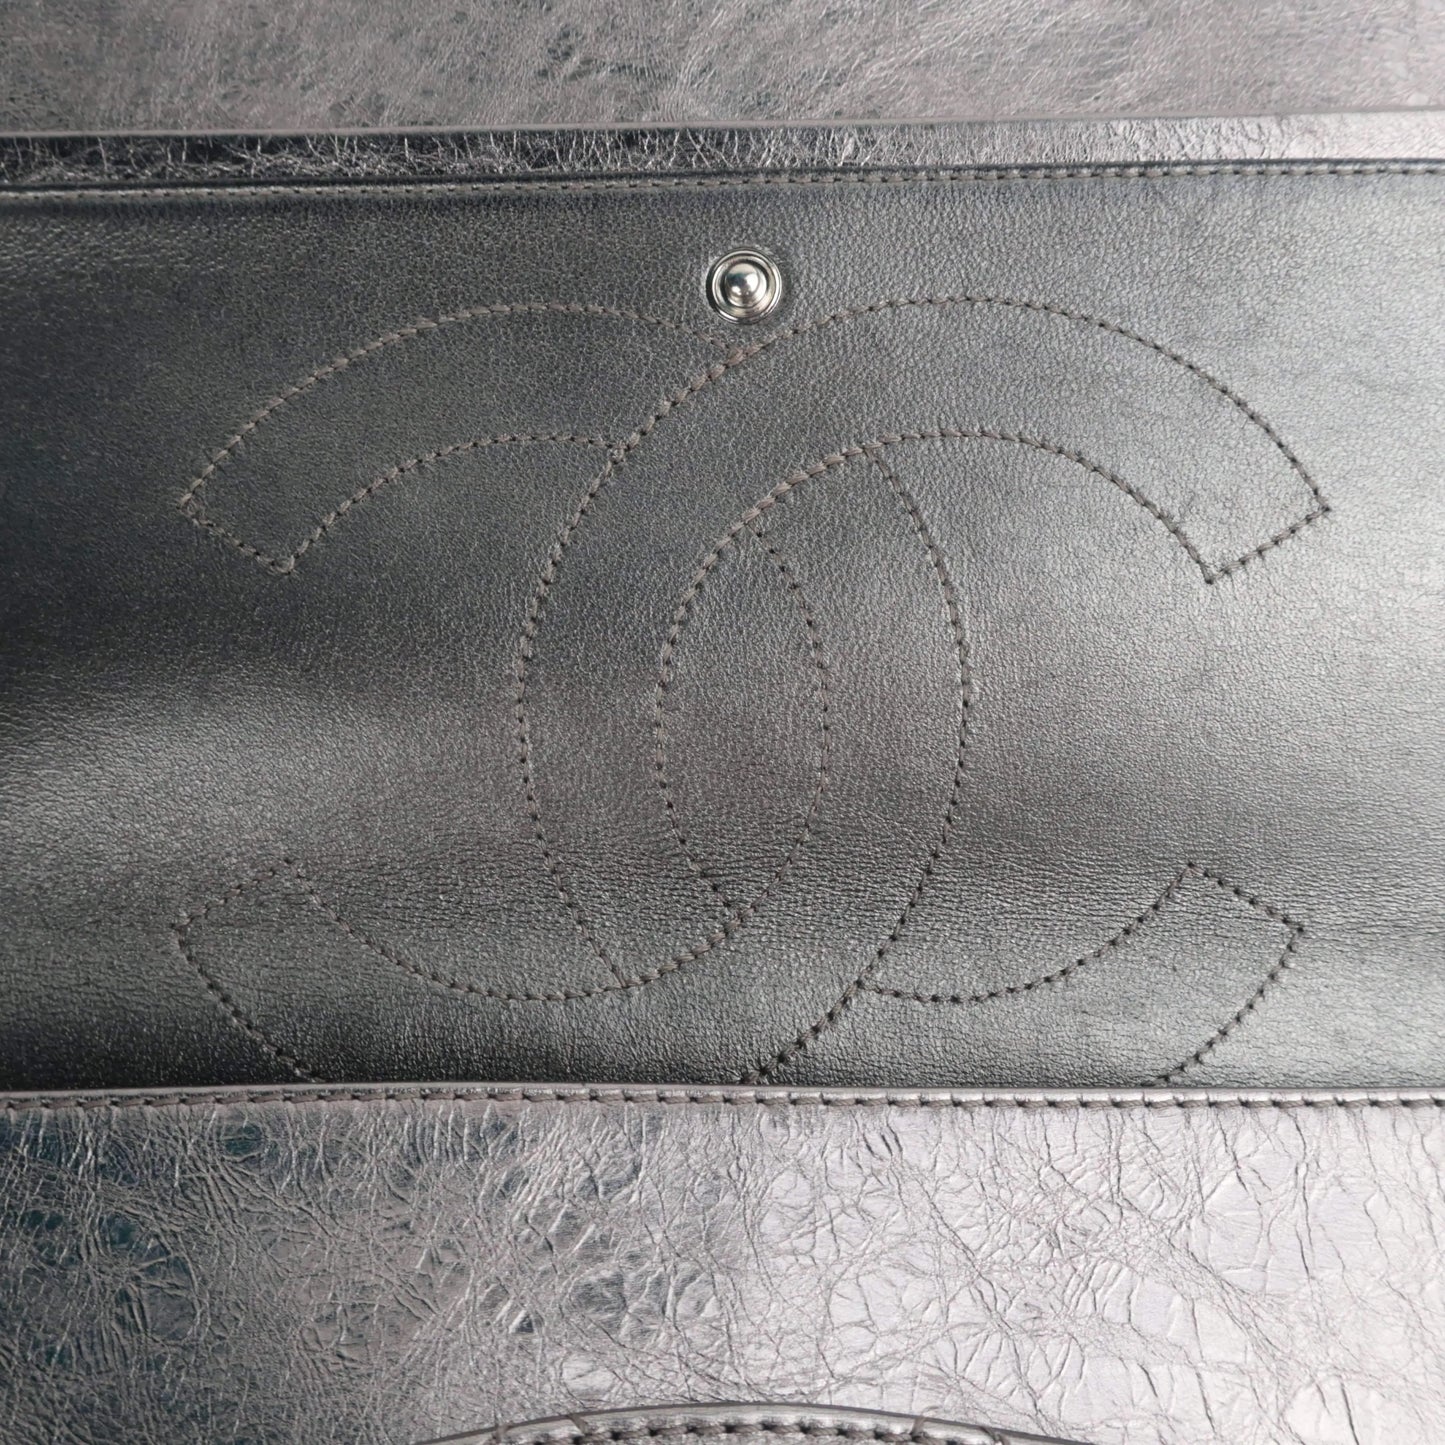 Chanel Chanel Silver Metallic Aged Calfskin 2.55 Reissue 227 Double Flap Bag, 2009 LVBagaholic